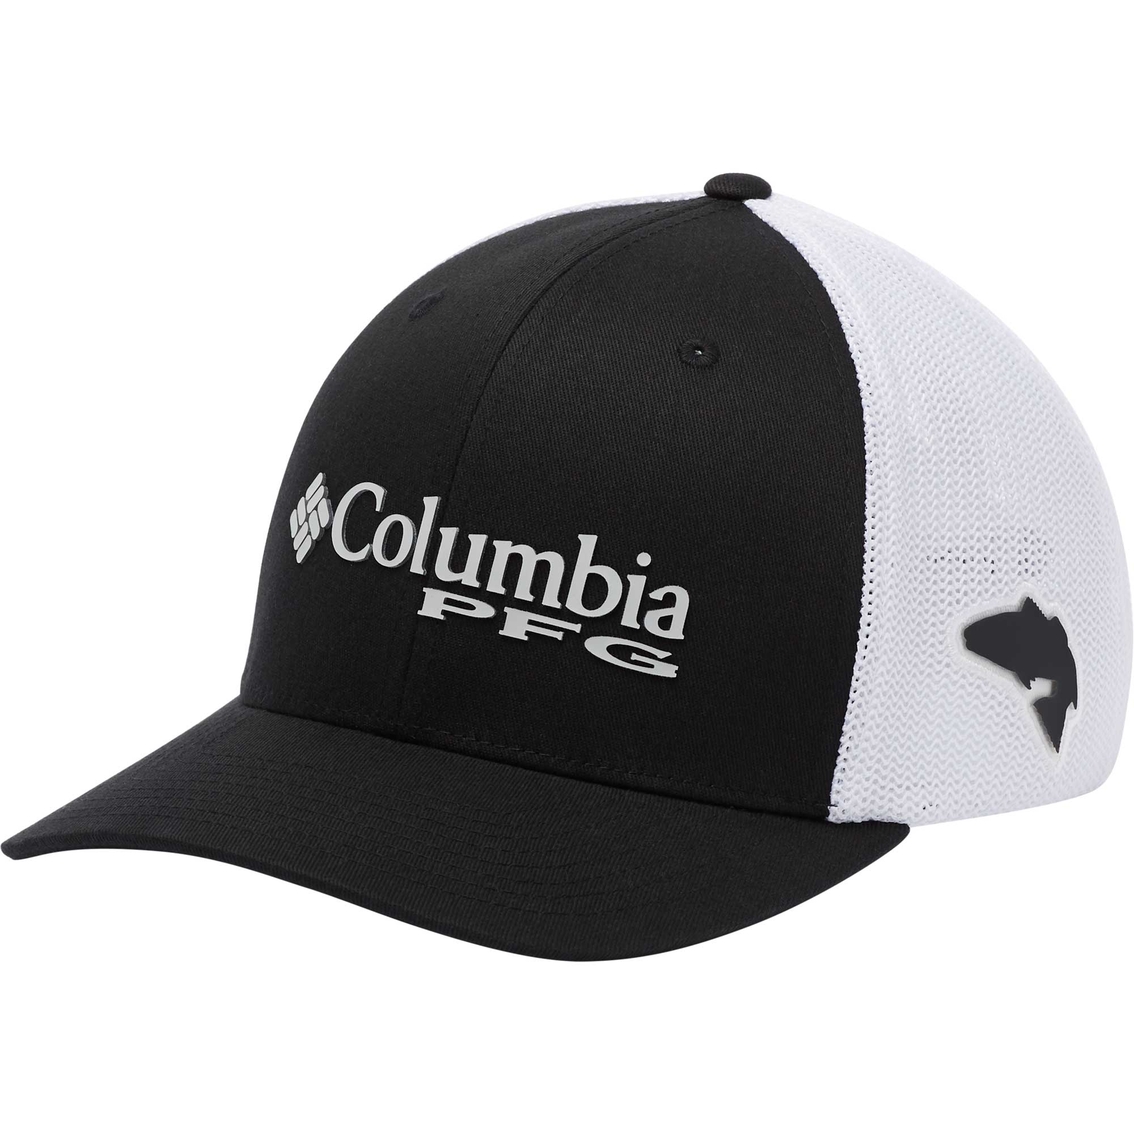 Columbia Performance Fishing Gear (pfg) Mesh Ball Cap